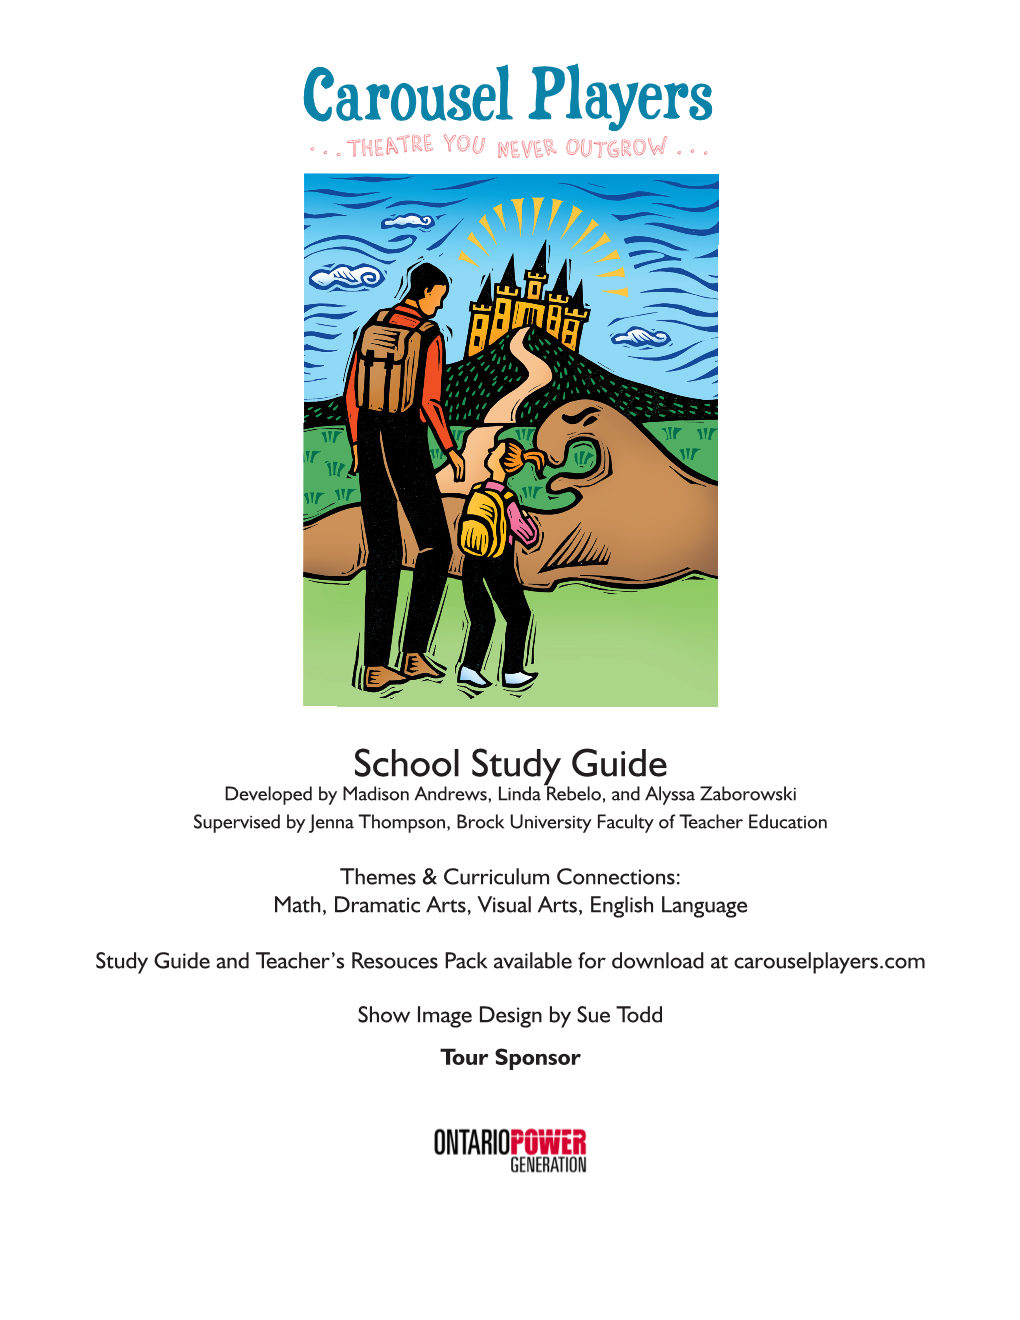 School Study Guide Developed by Madison Andrews, Linda Rebelo, and Alyssa Zaborowski Supervised by Jenna Thompson, Brock University Faculty of Teacher Education